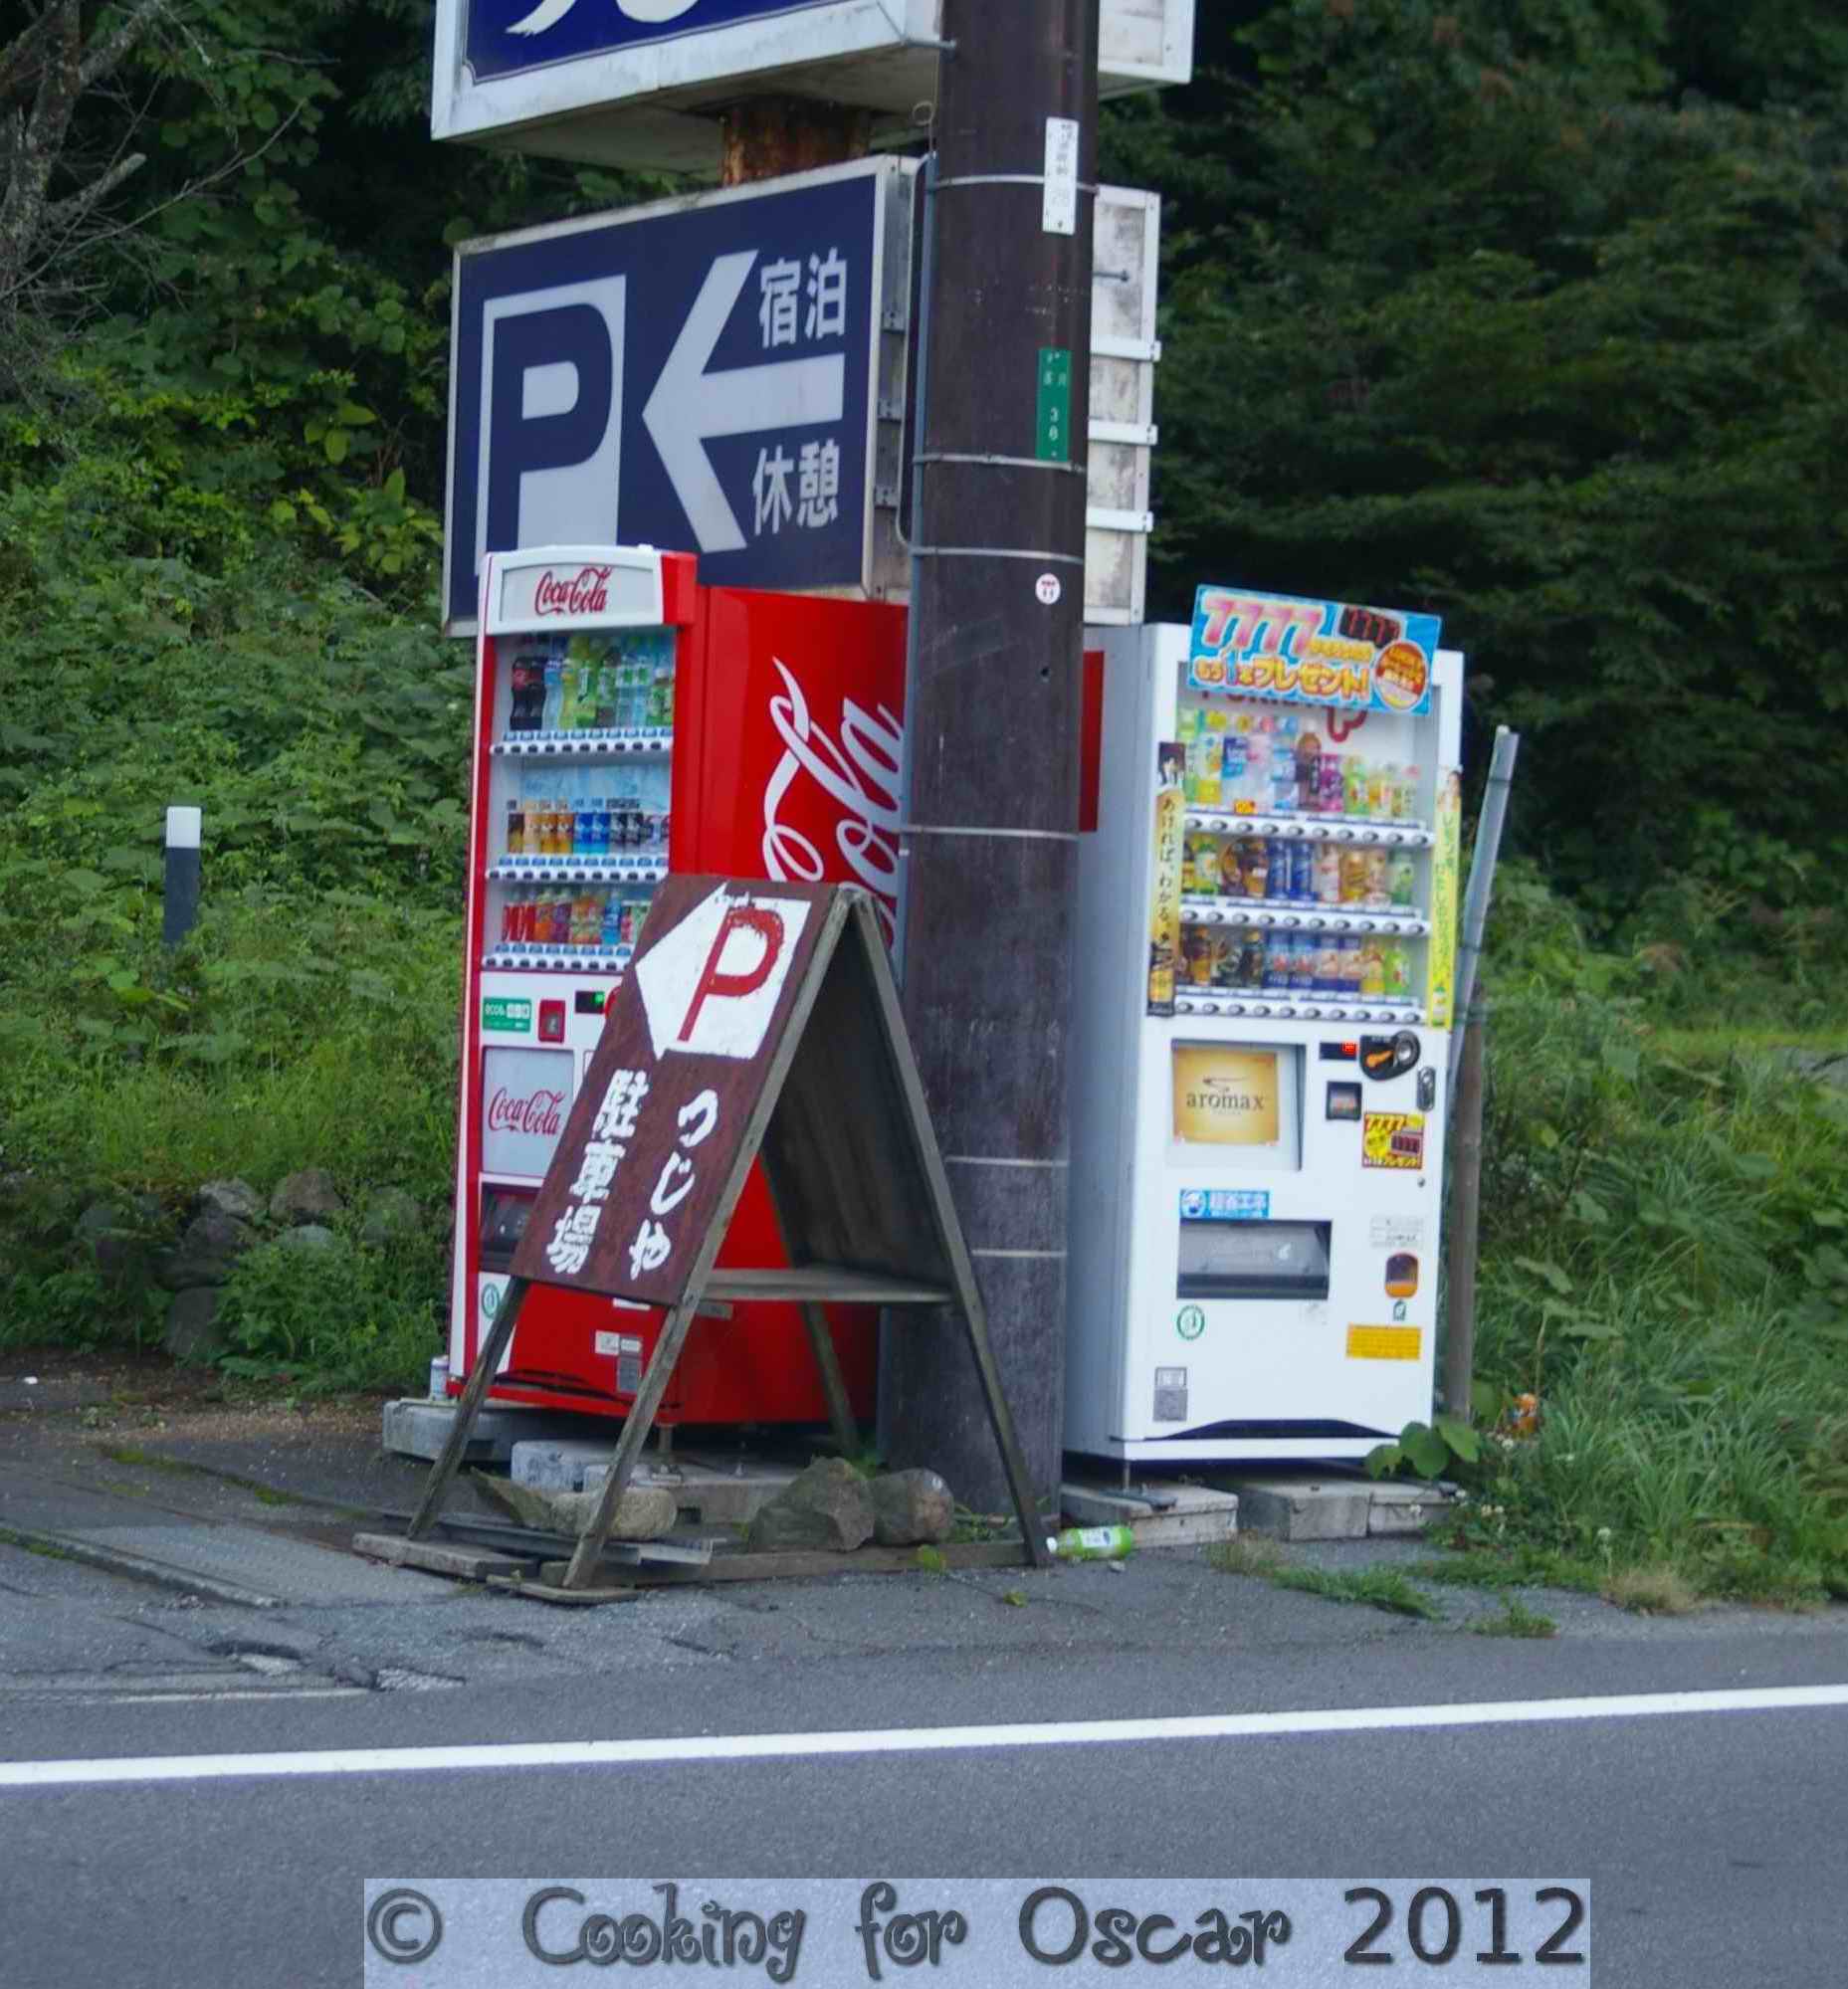 Mount Fuji Japan - Vending Machine